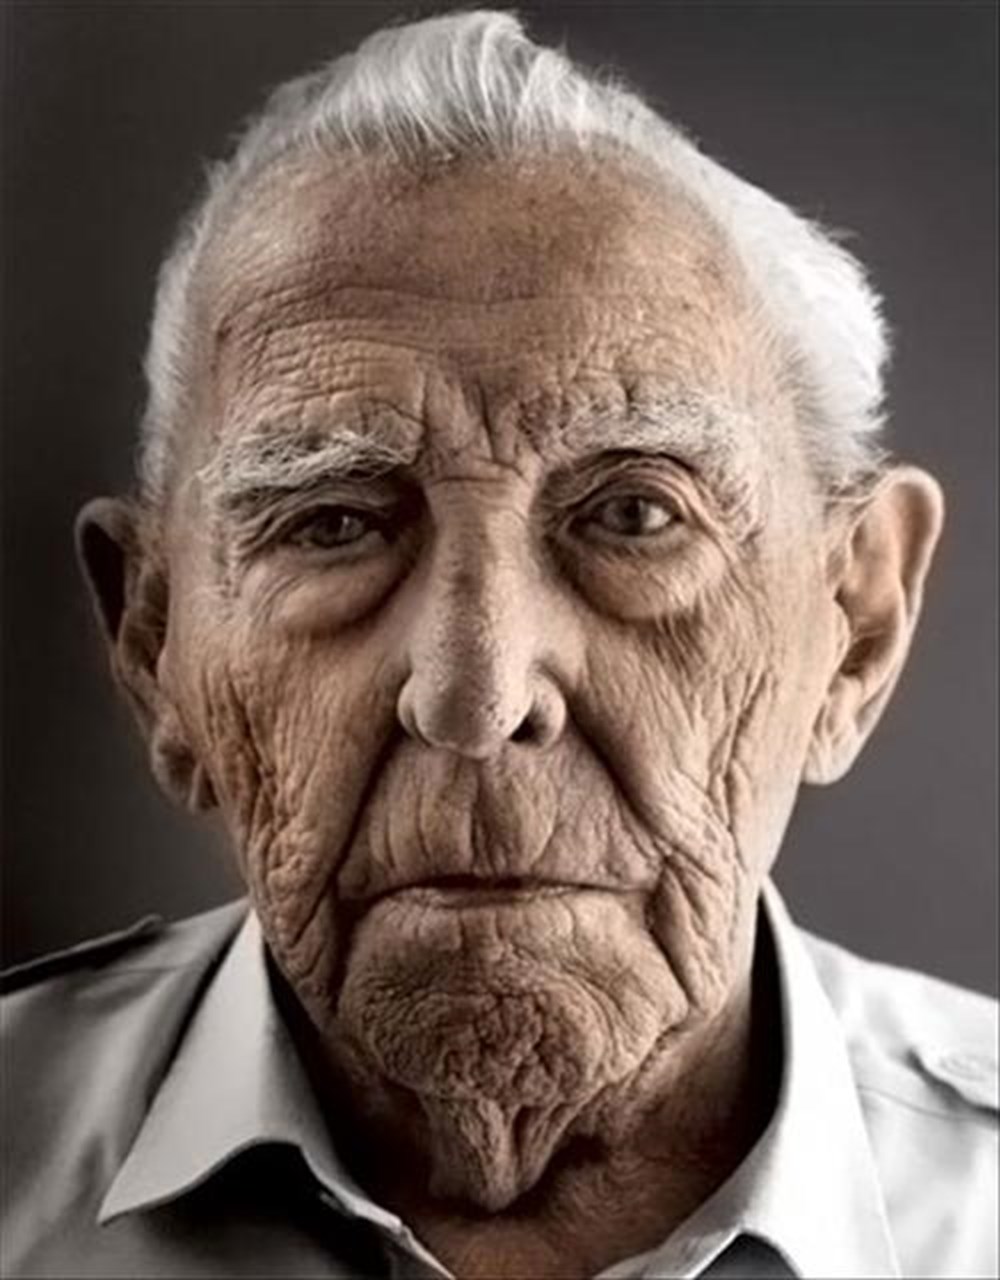 Old man new. Лицо старика. Фотопортрет старика. Портрет пожилого мужчины. Старый человек.